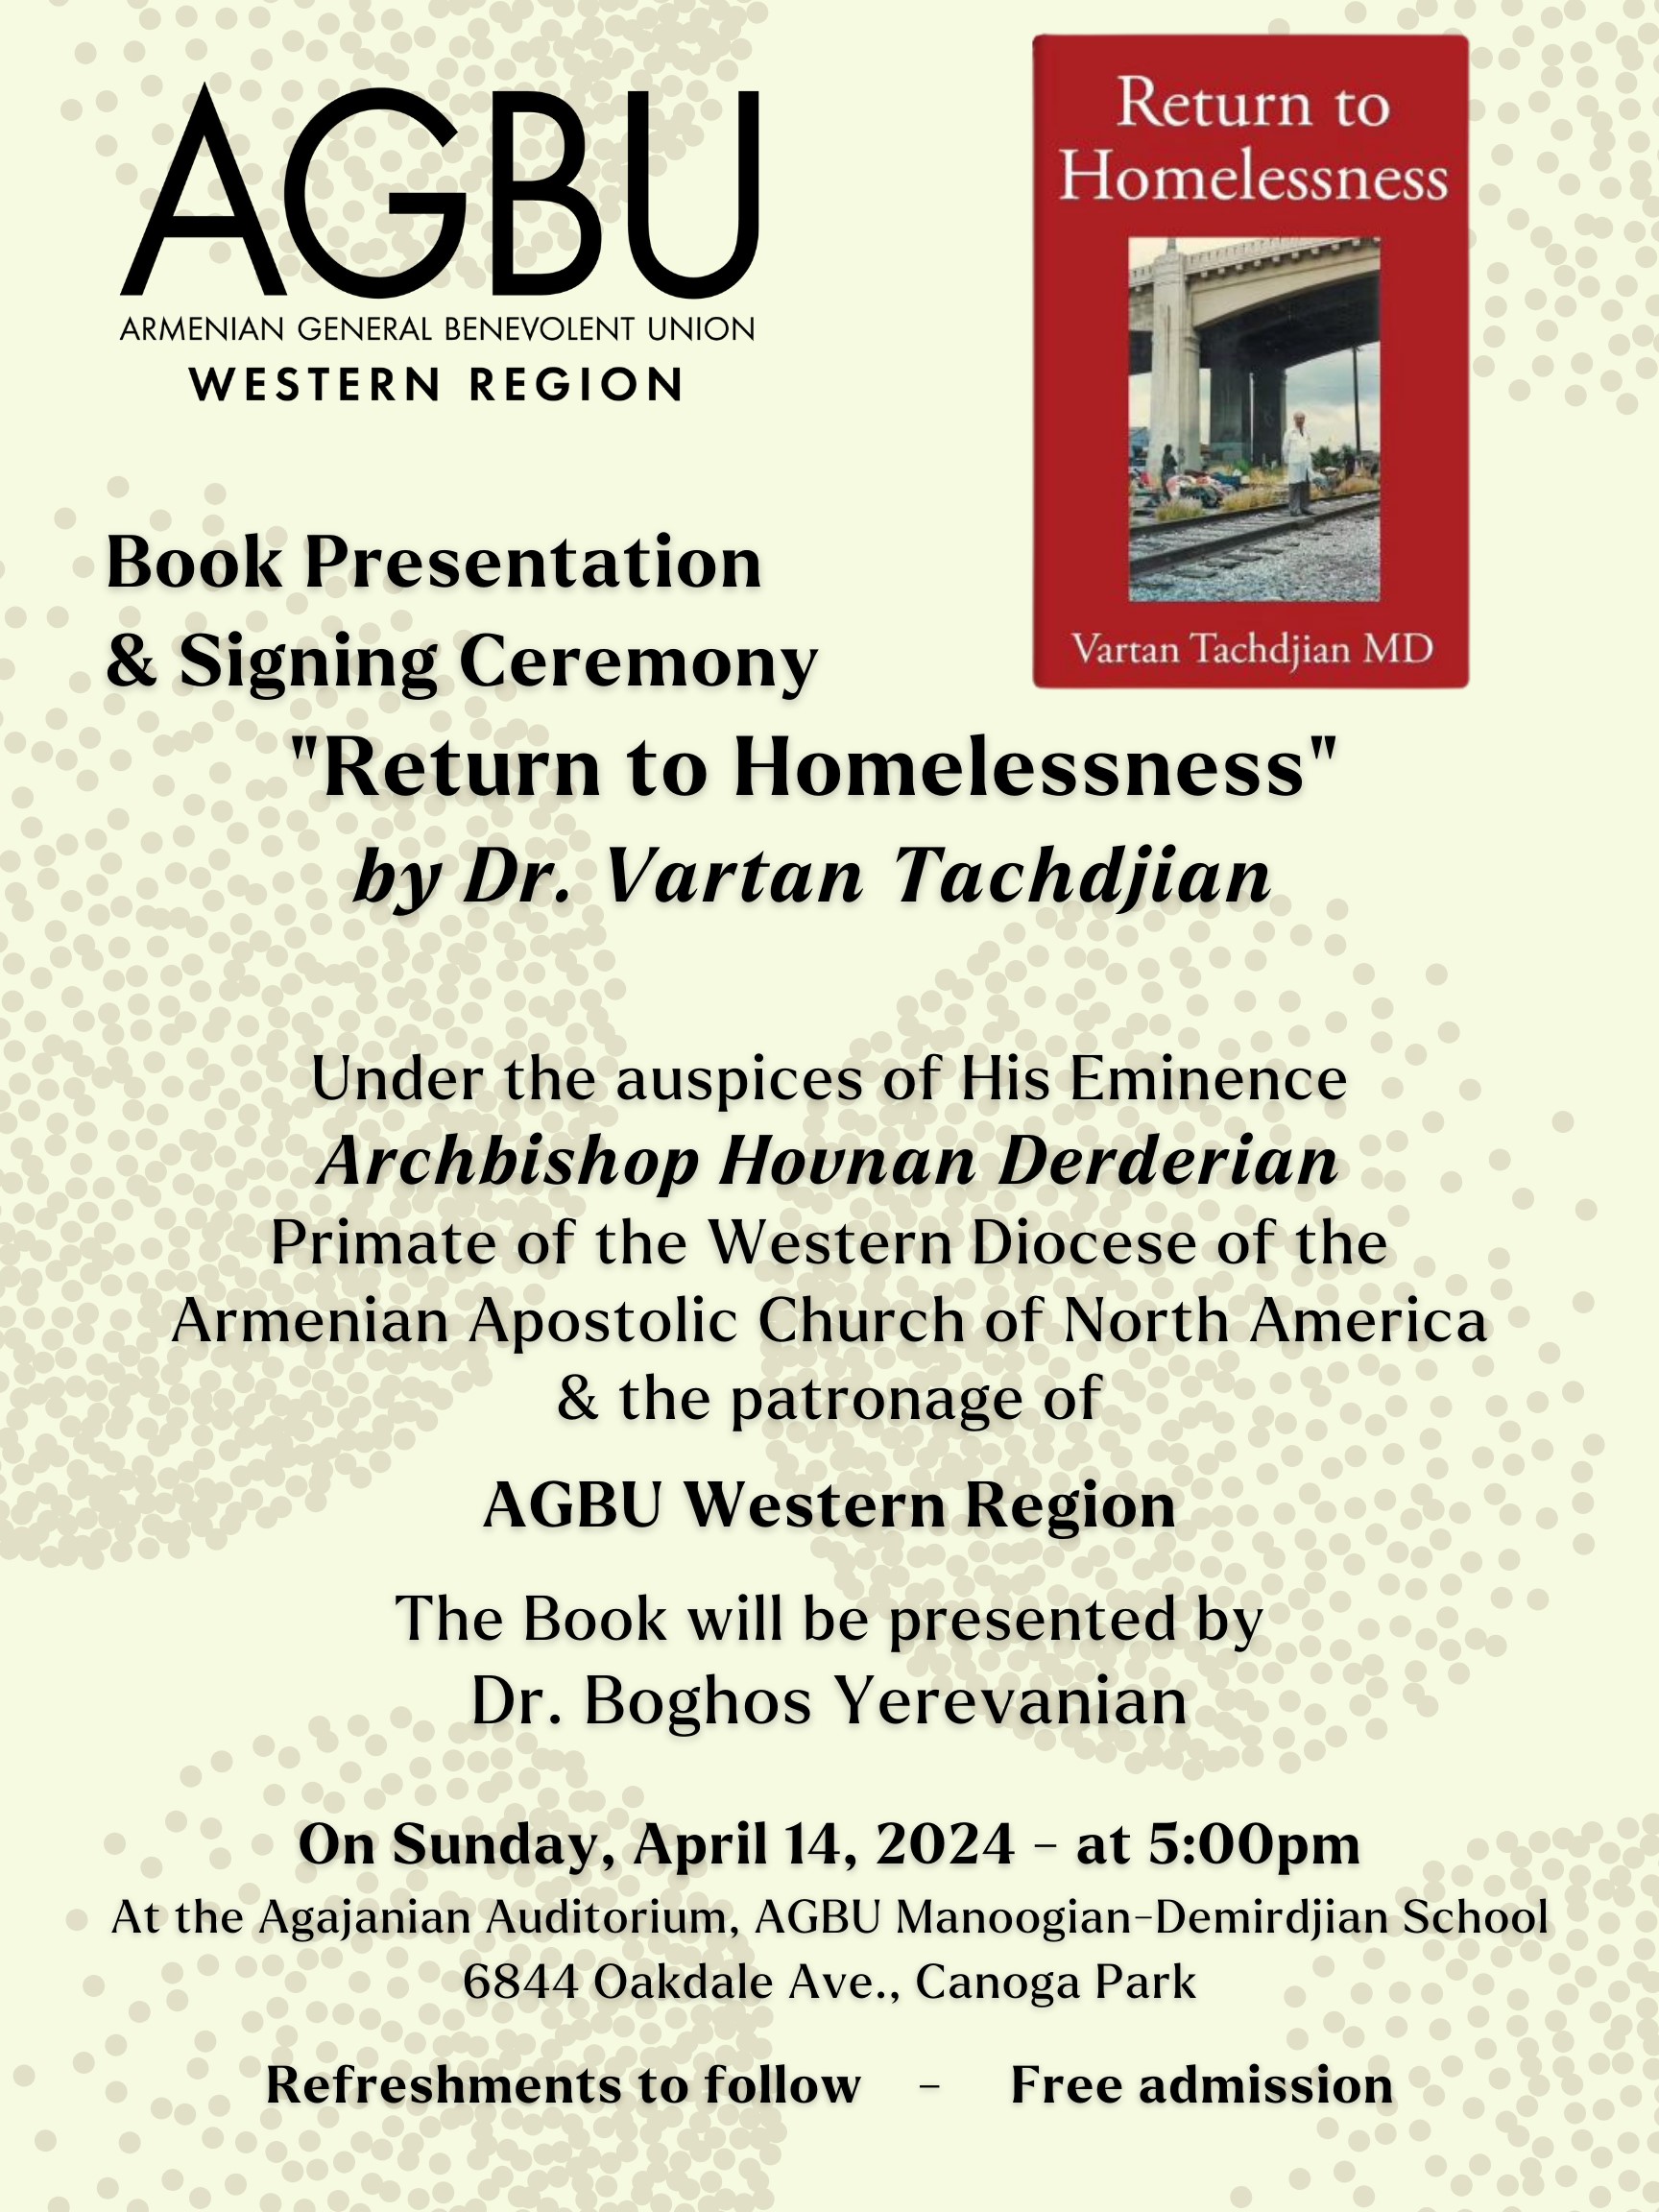 Book Presentation & Signing Ceremony by Dr. Vartan Tachdjian